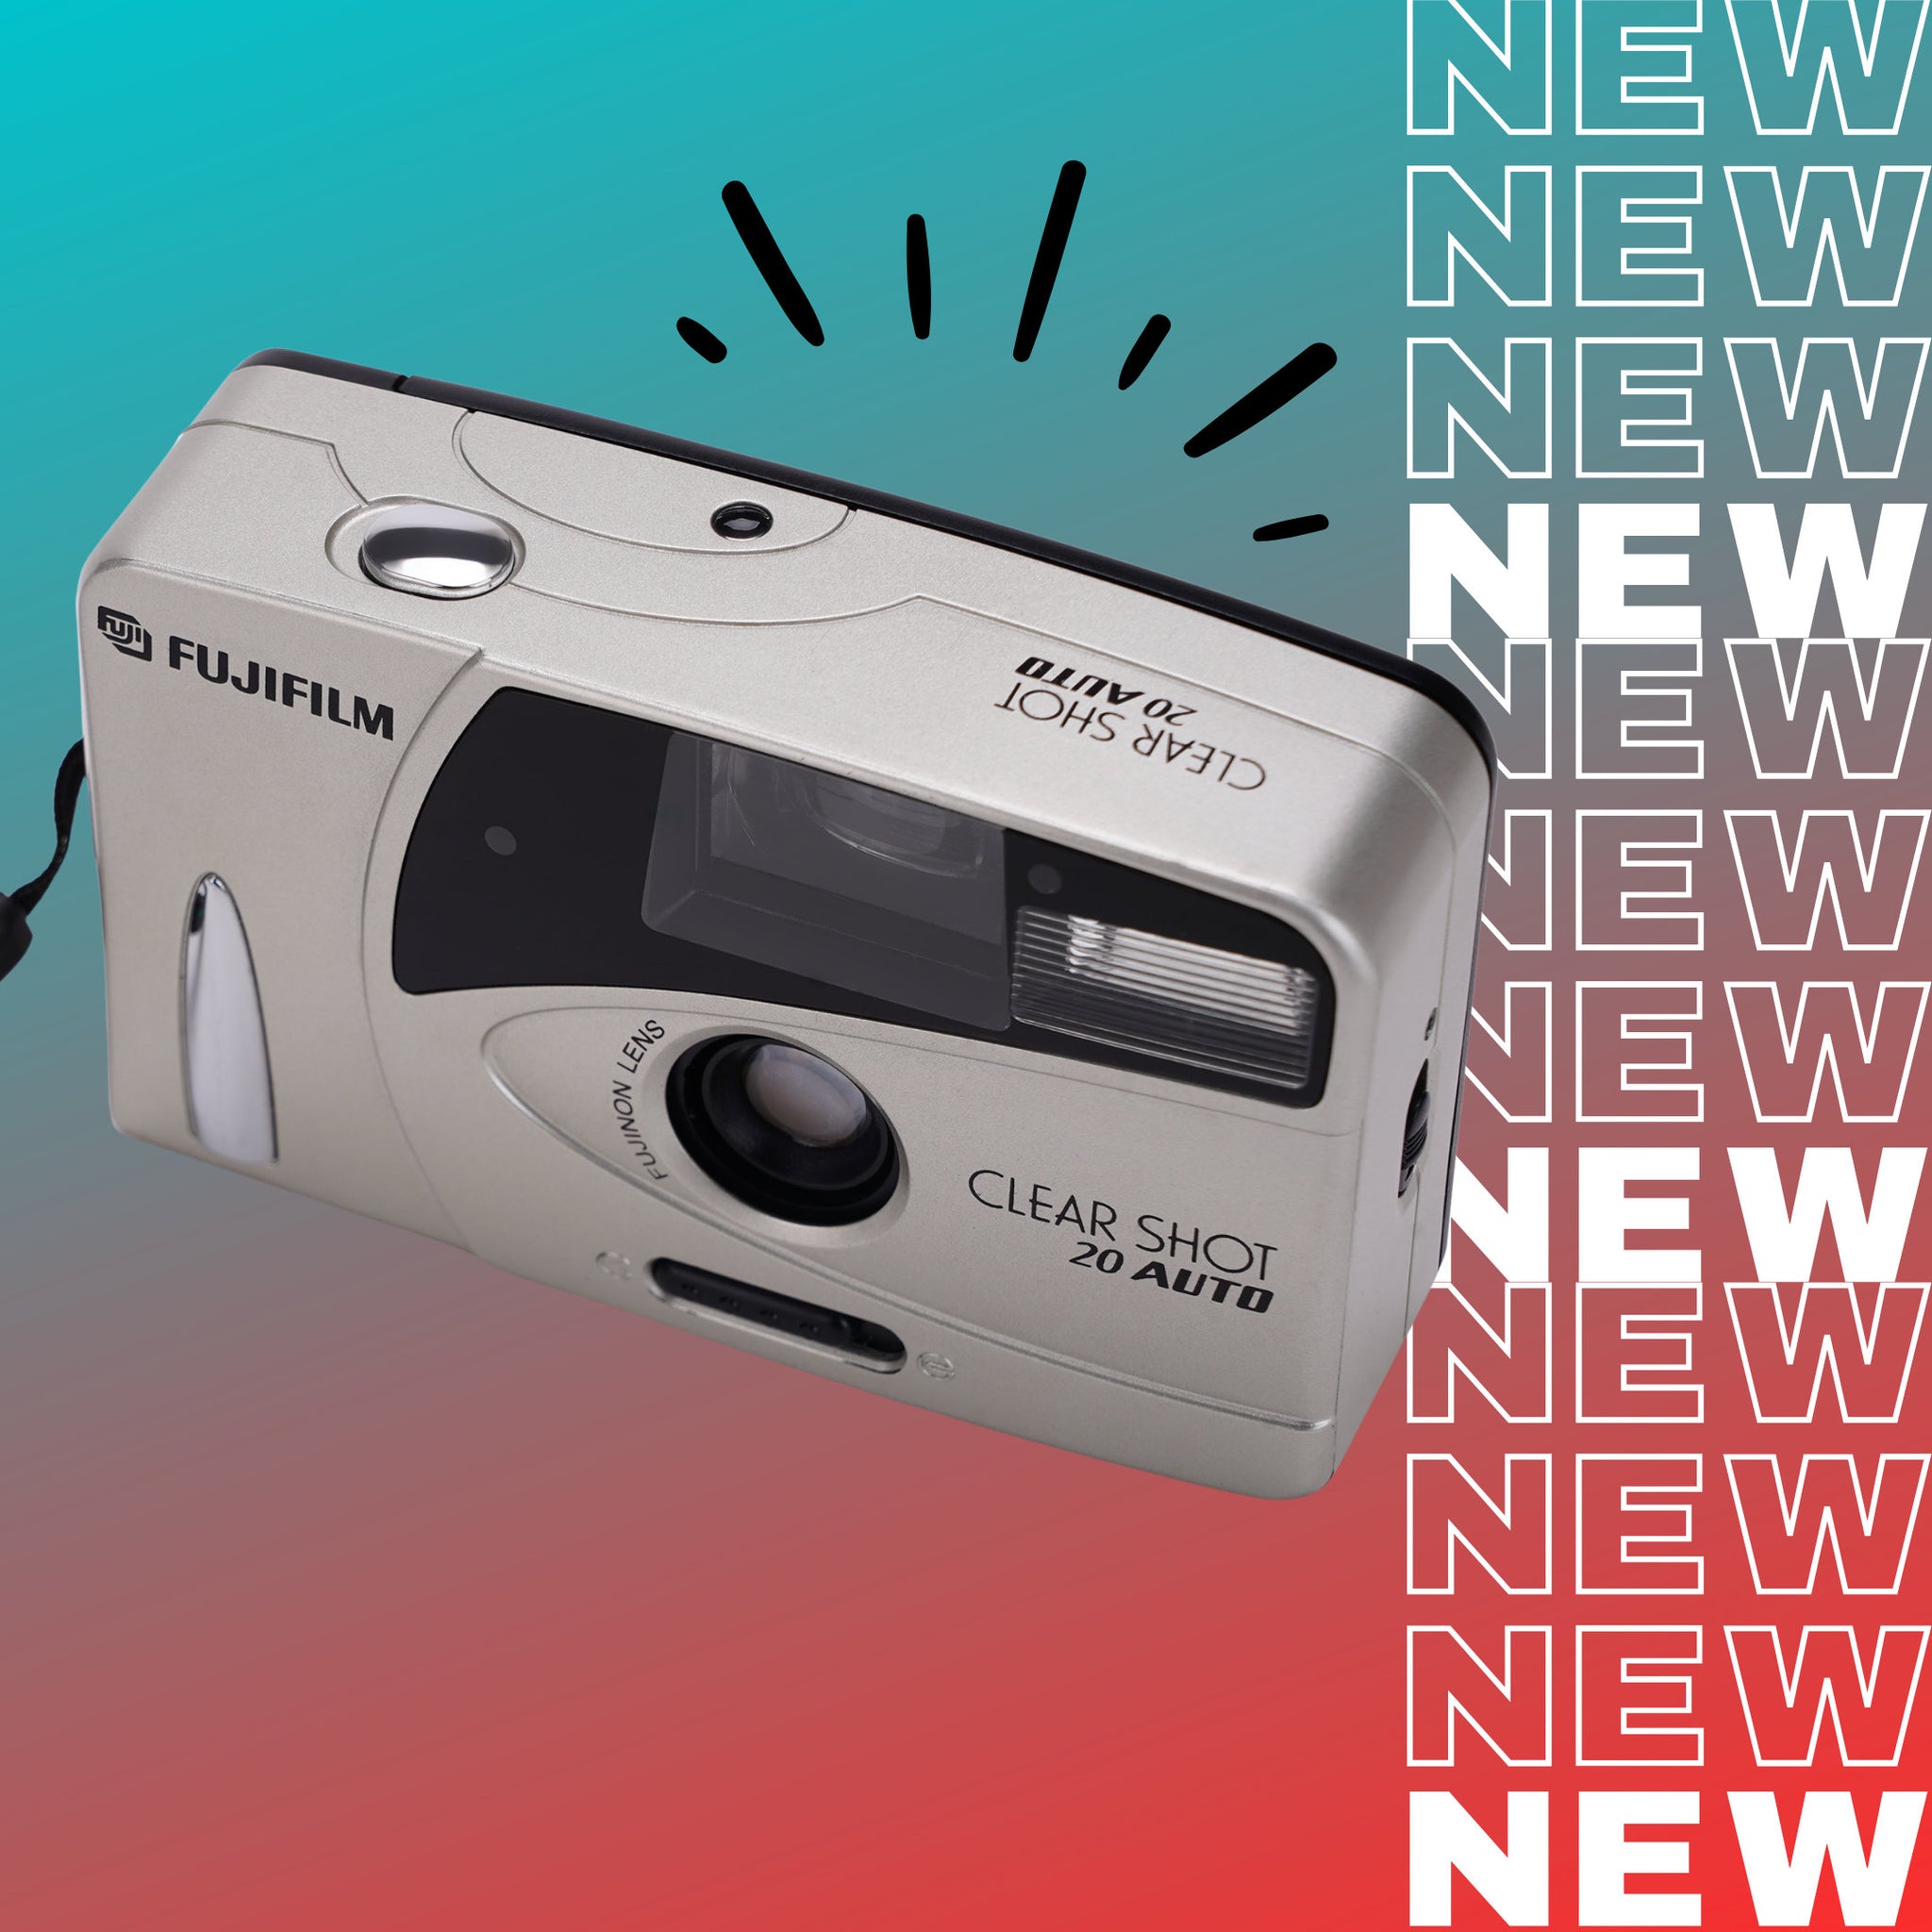 NEW ARRIVAL!! Vingtage Fujifilm Camera, Working Film Camera, Best gift Camera - Vintage Polaroid Instant Cameras